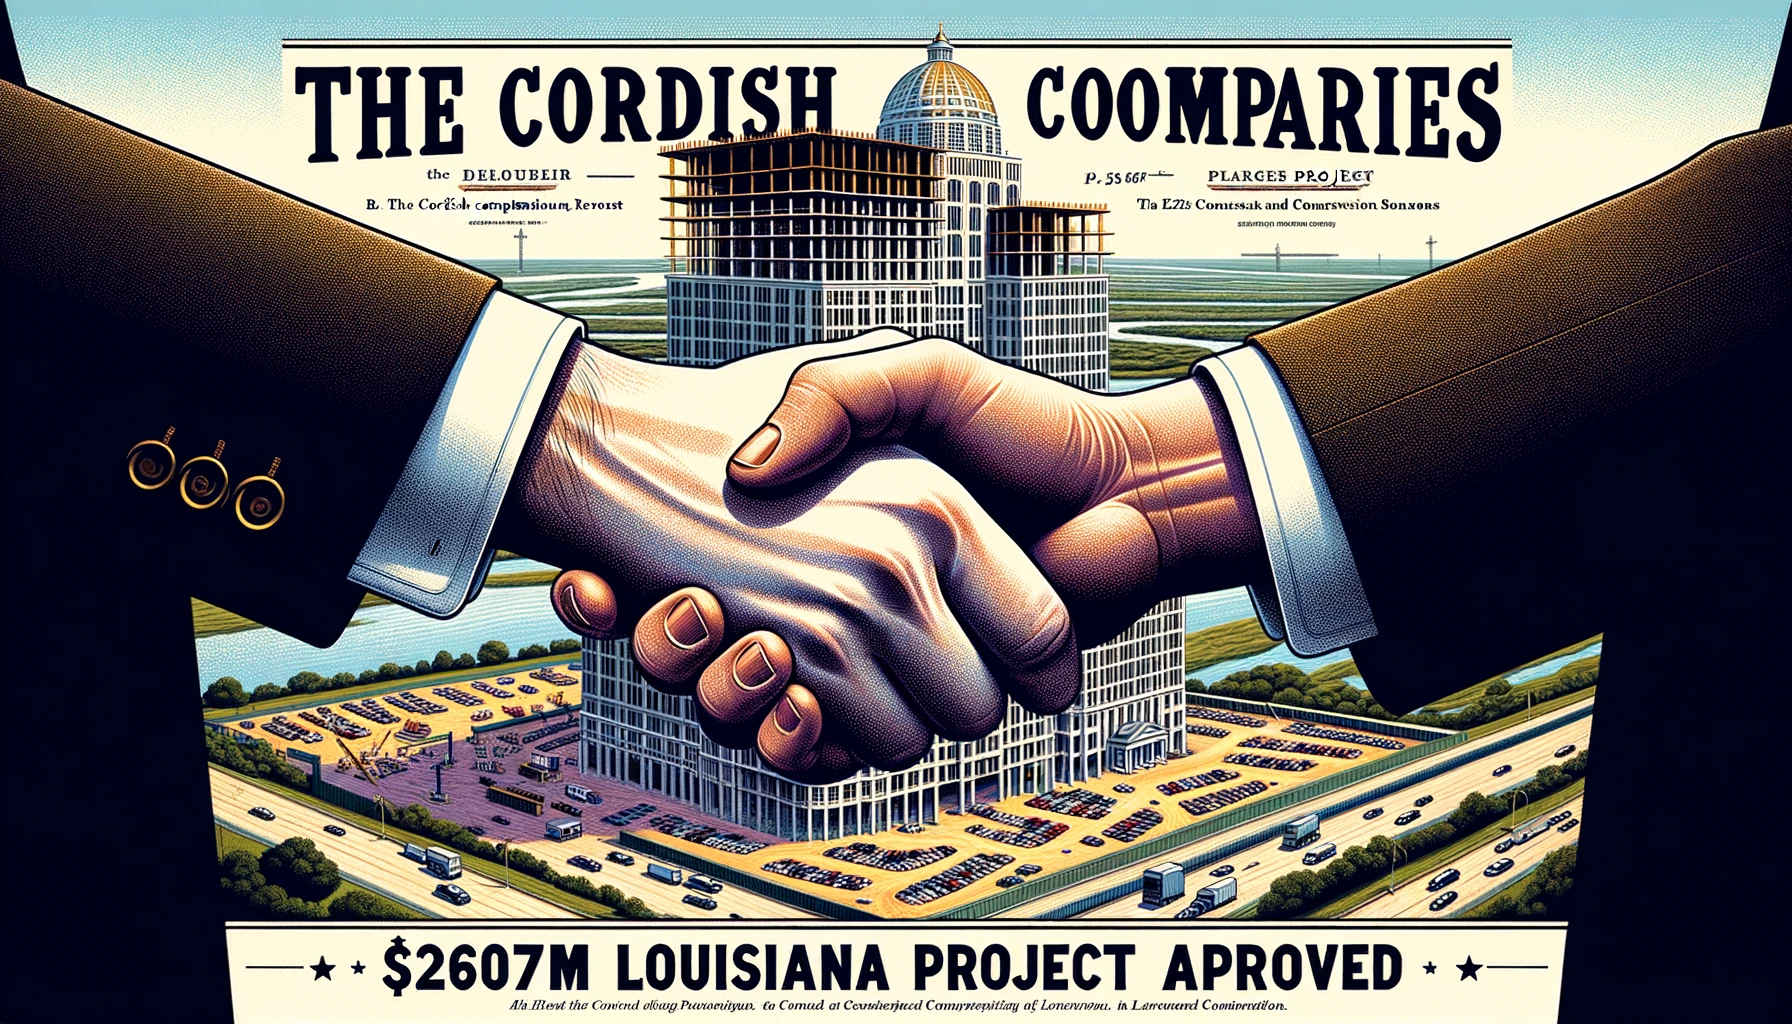 Cordish’s $270M Louisiana Casino Venture Image